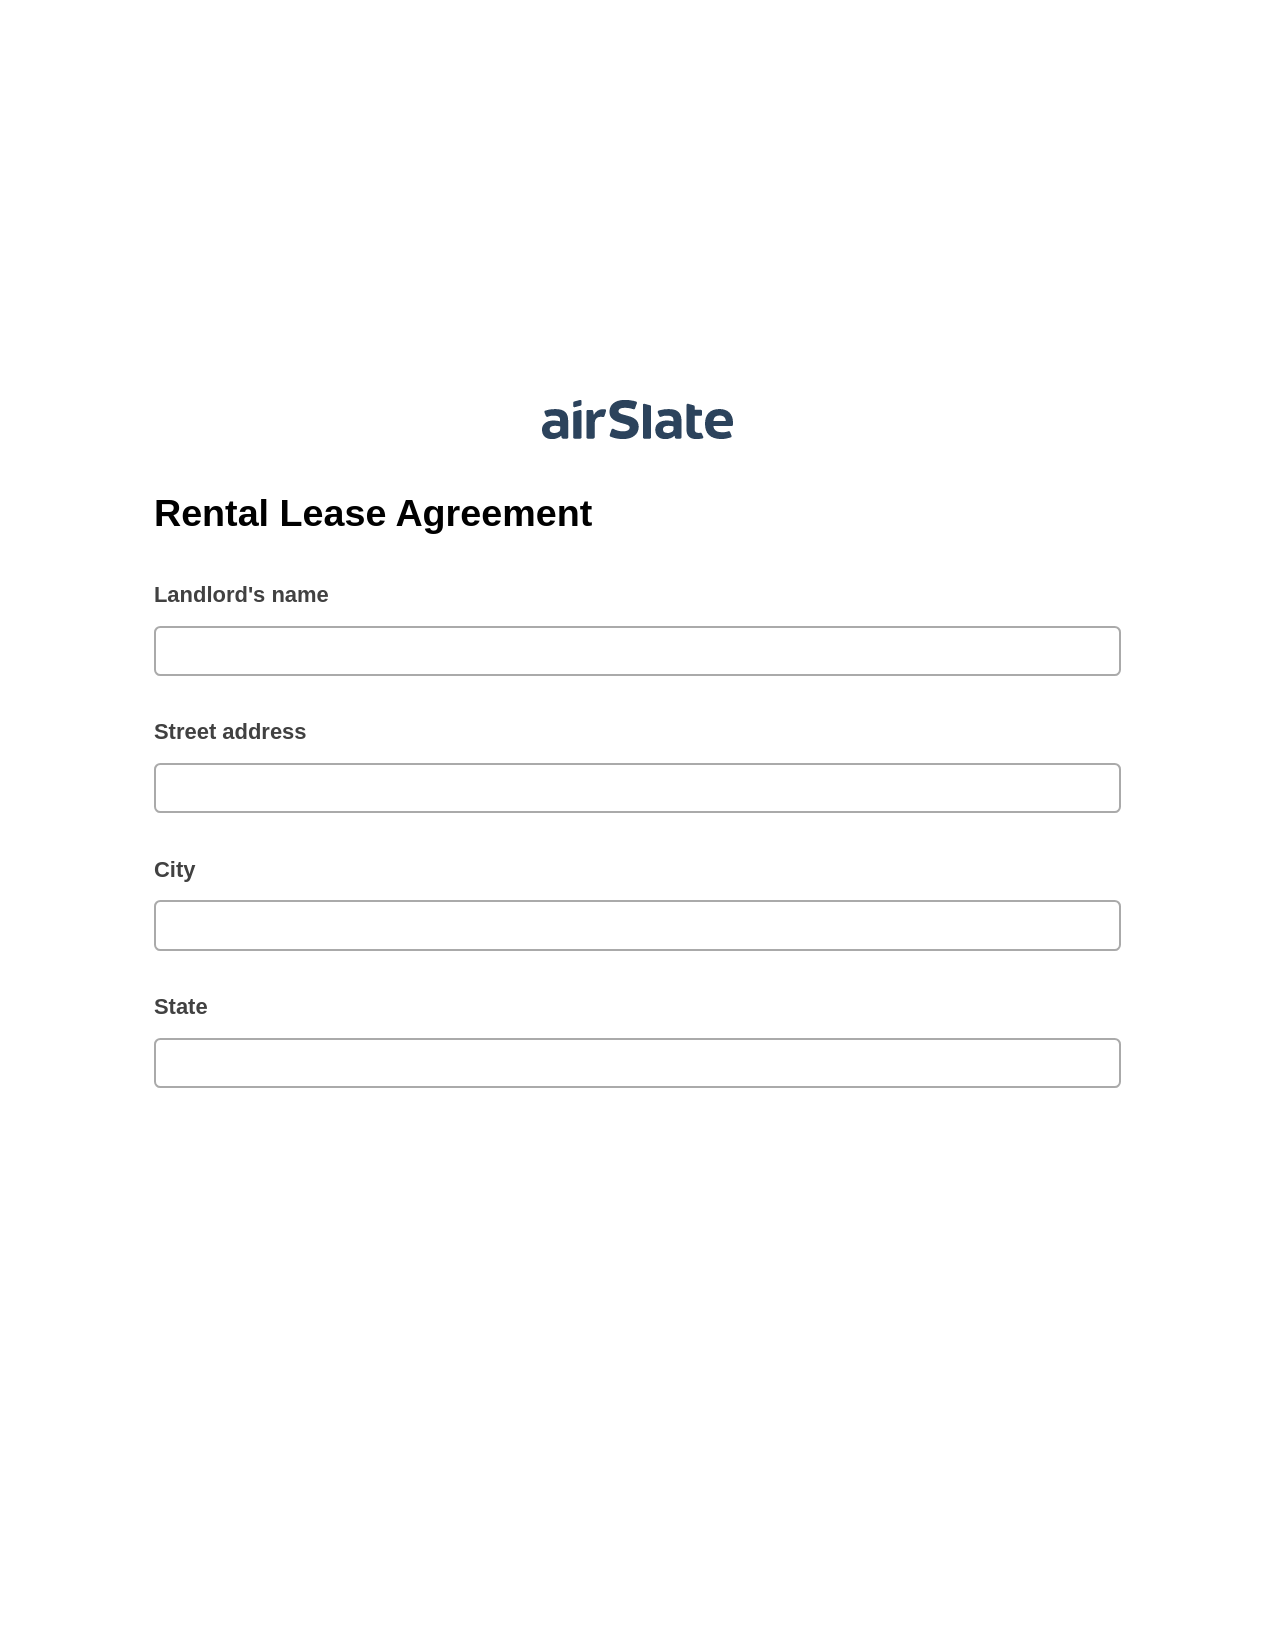 Multirole Rental Lease Agreement Pre-fill from Google Sheet Dropdown Options Bot, Google Cloud Print Bot, Email Notification Postfinish Bot